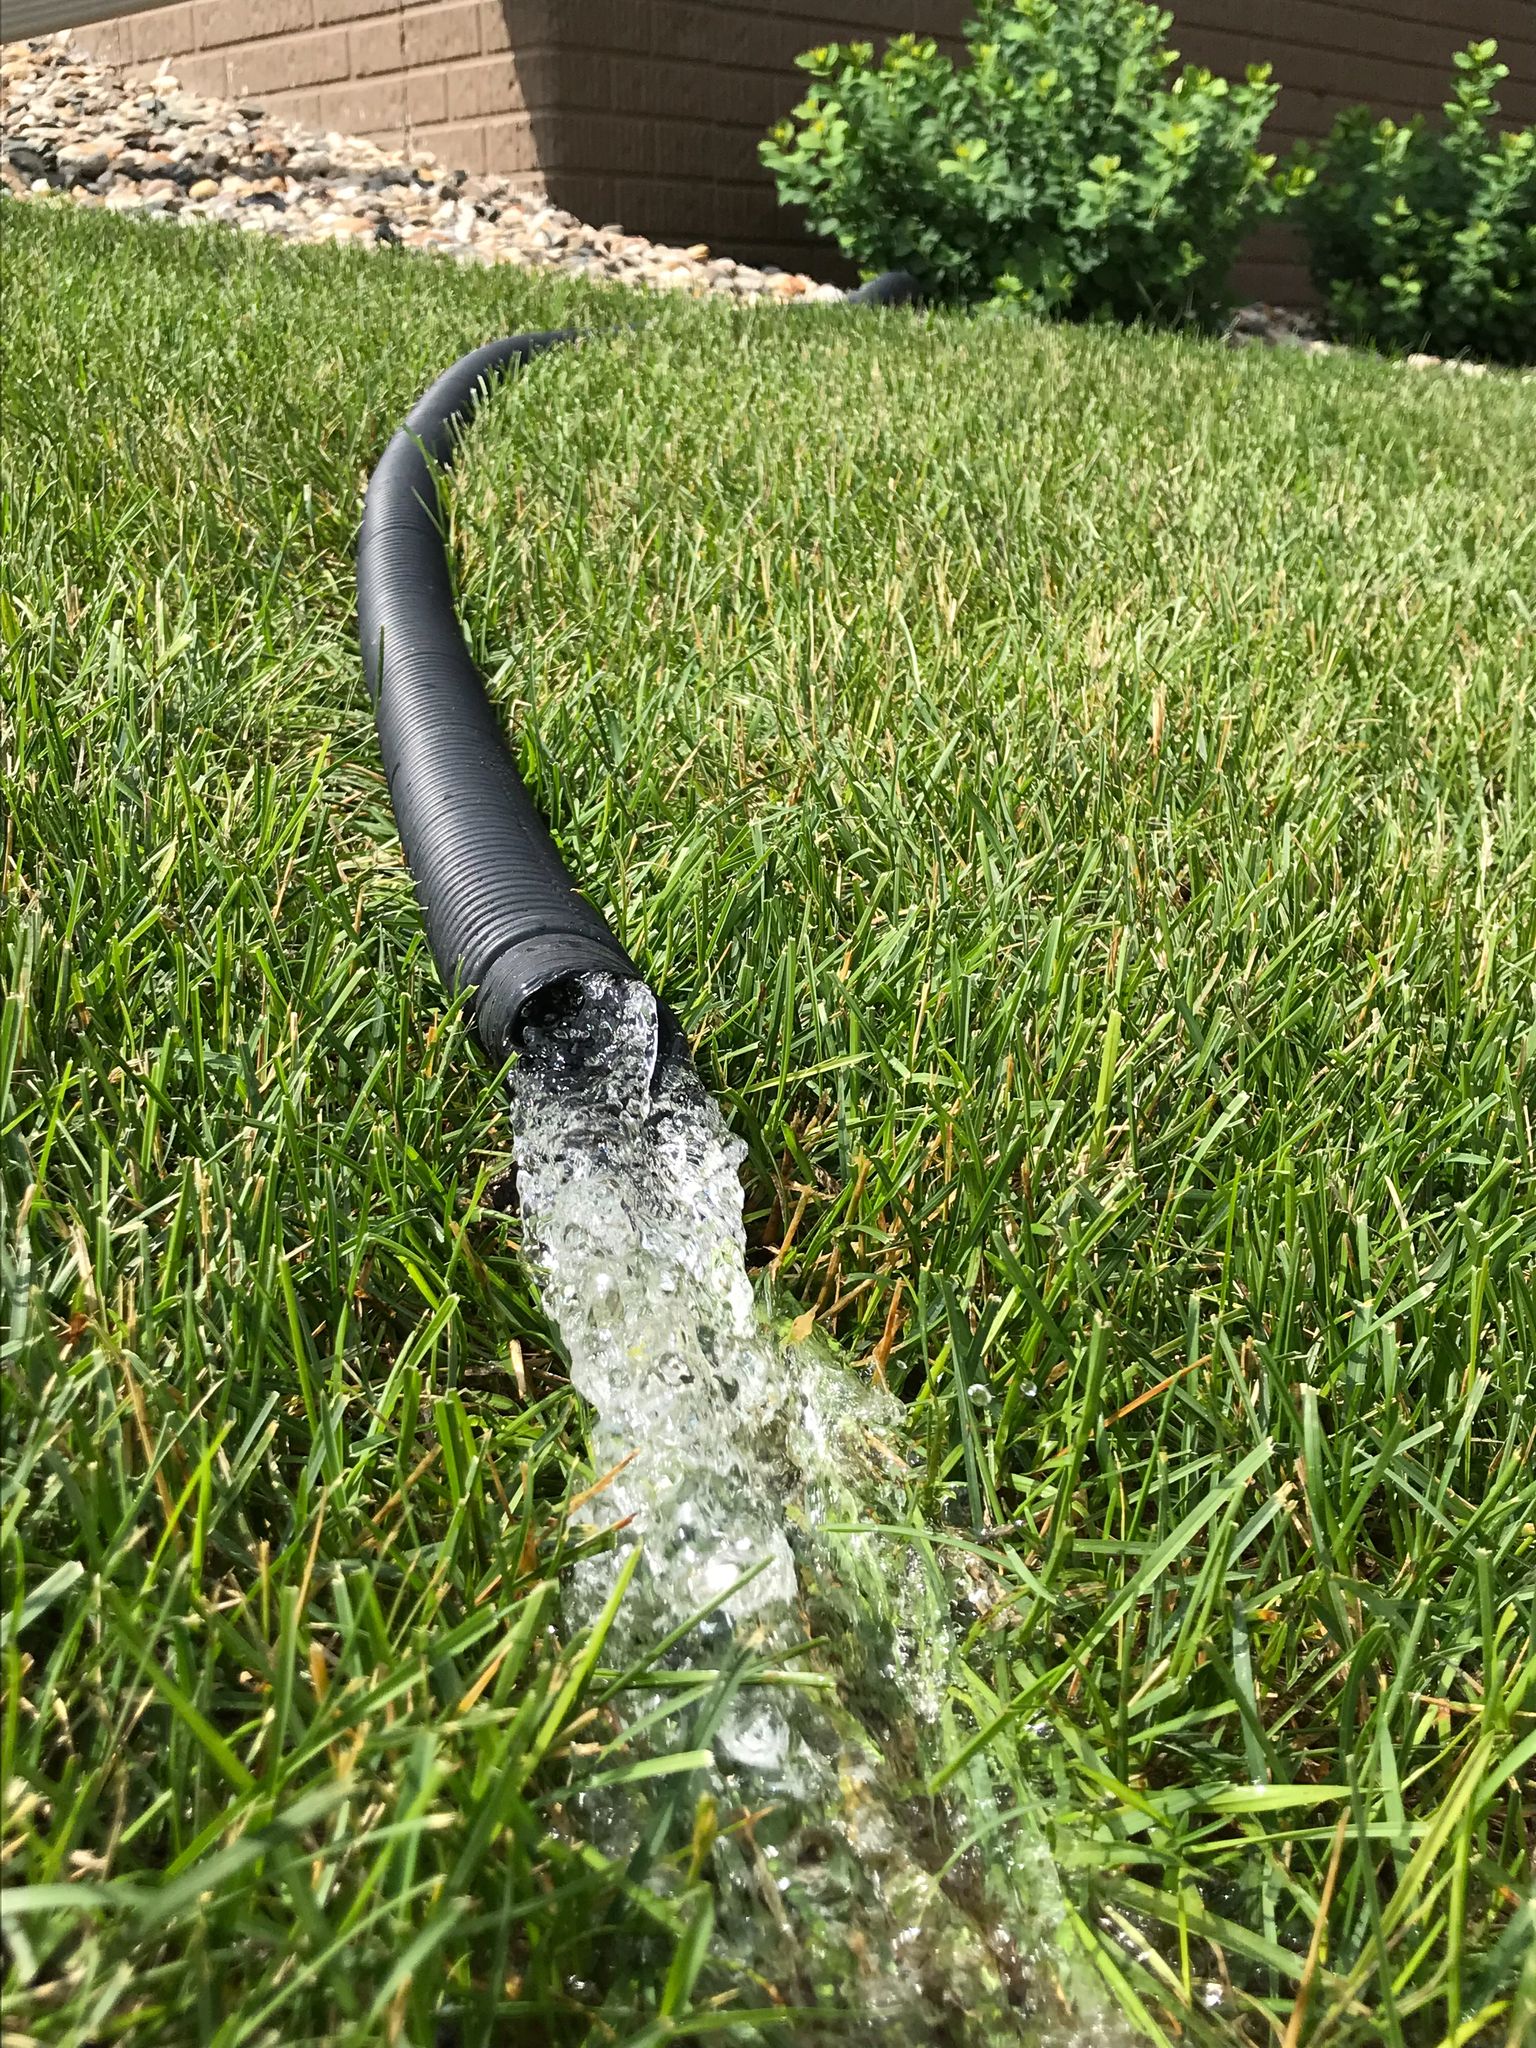 water hose